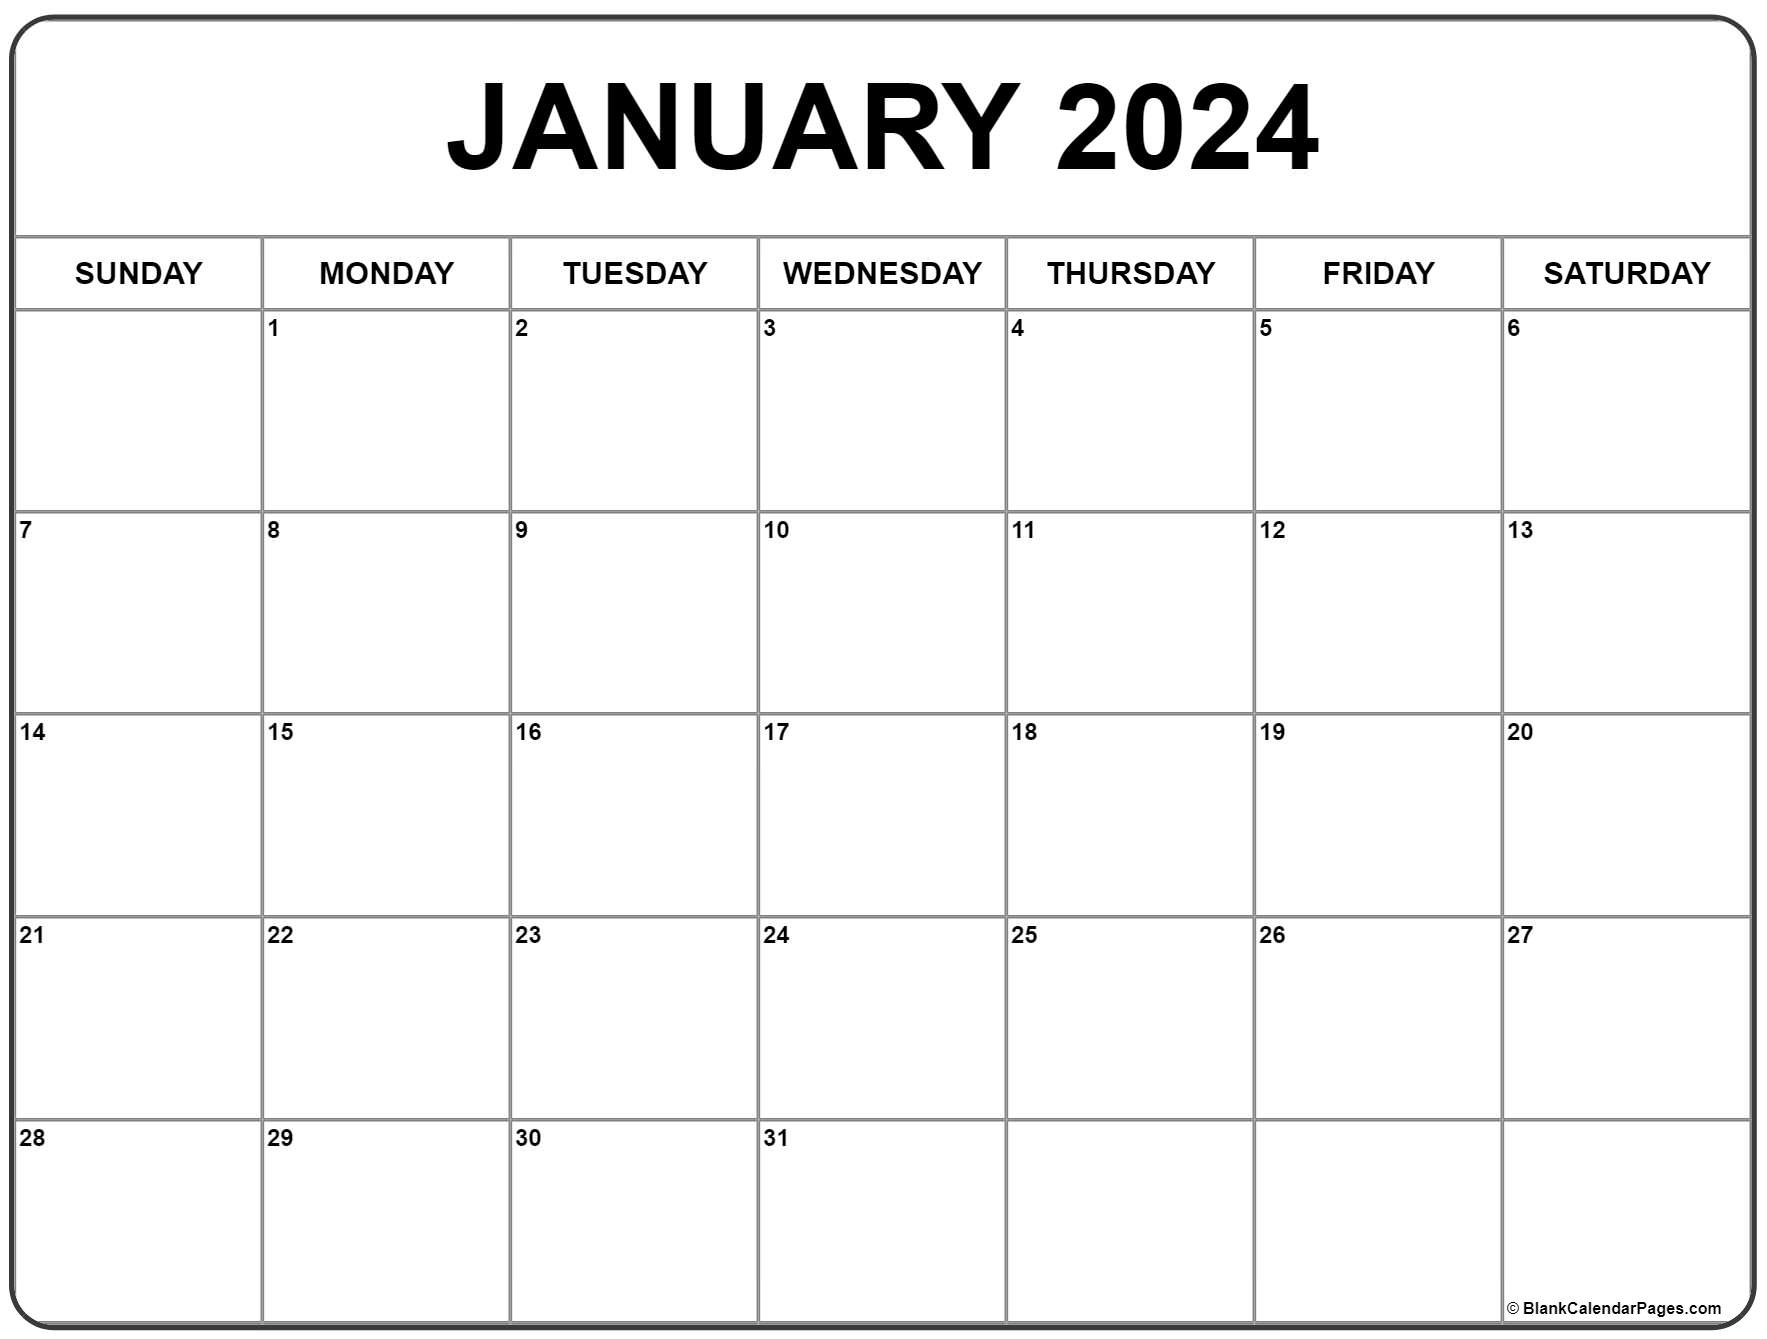 January 2024 Calendar | Free Printable Calendar for Free Printable Monthly Calendar For 2024